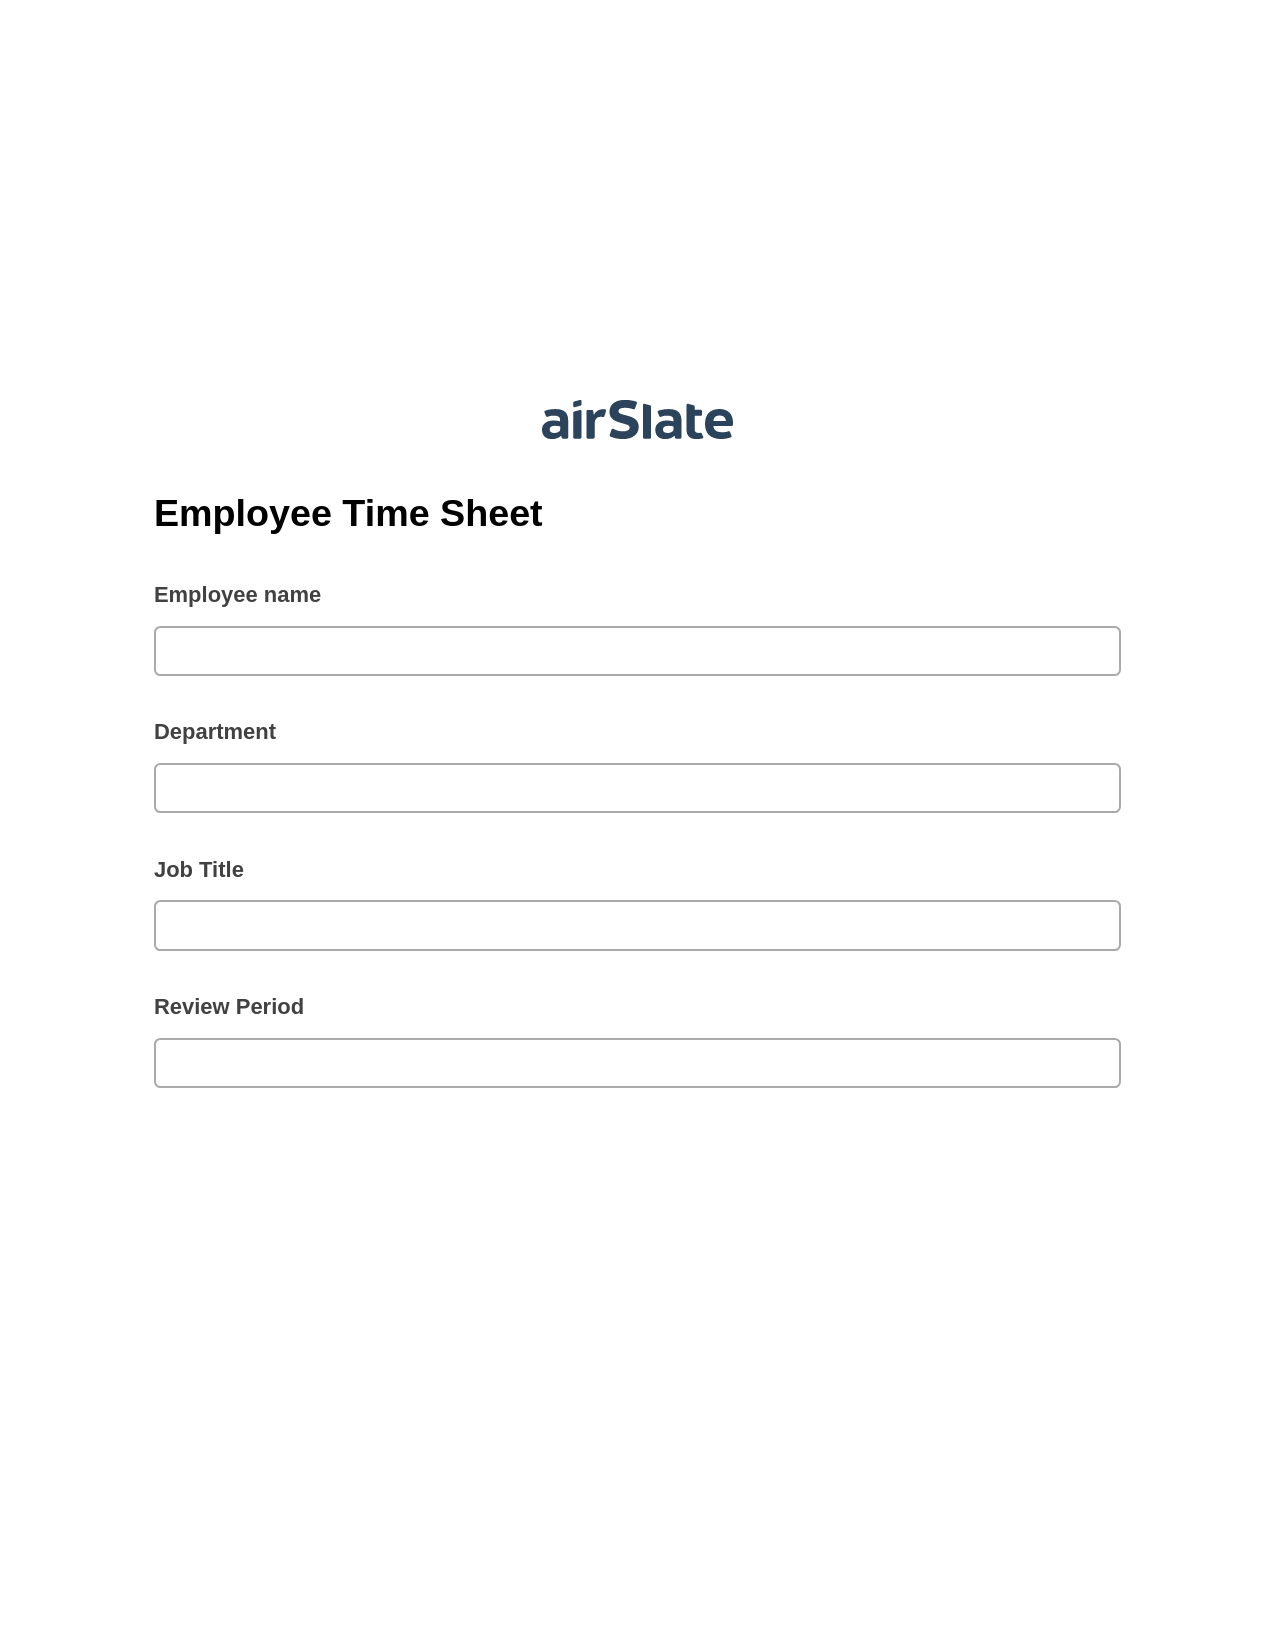 Multirole Employee Time Sheet Pre-fill Dropdowns from Google Sheet Bot, Create slate addon, Archive to Box Bot